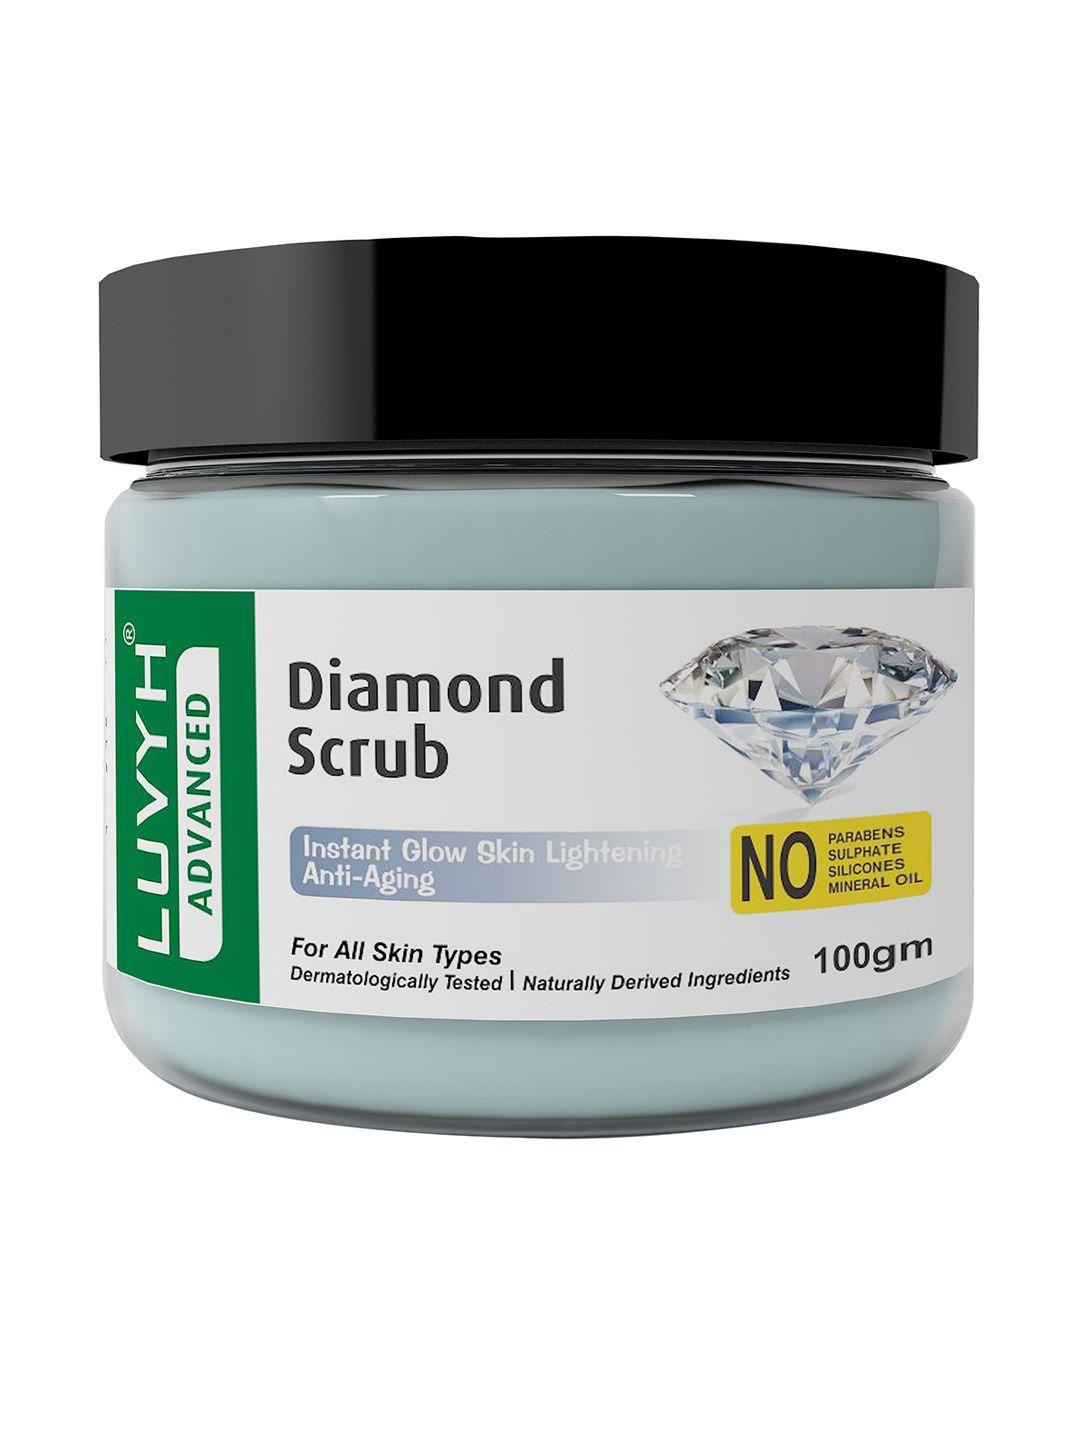 luvyh advanced diamond scrub for instant glow skin lightening - 100g